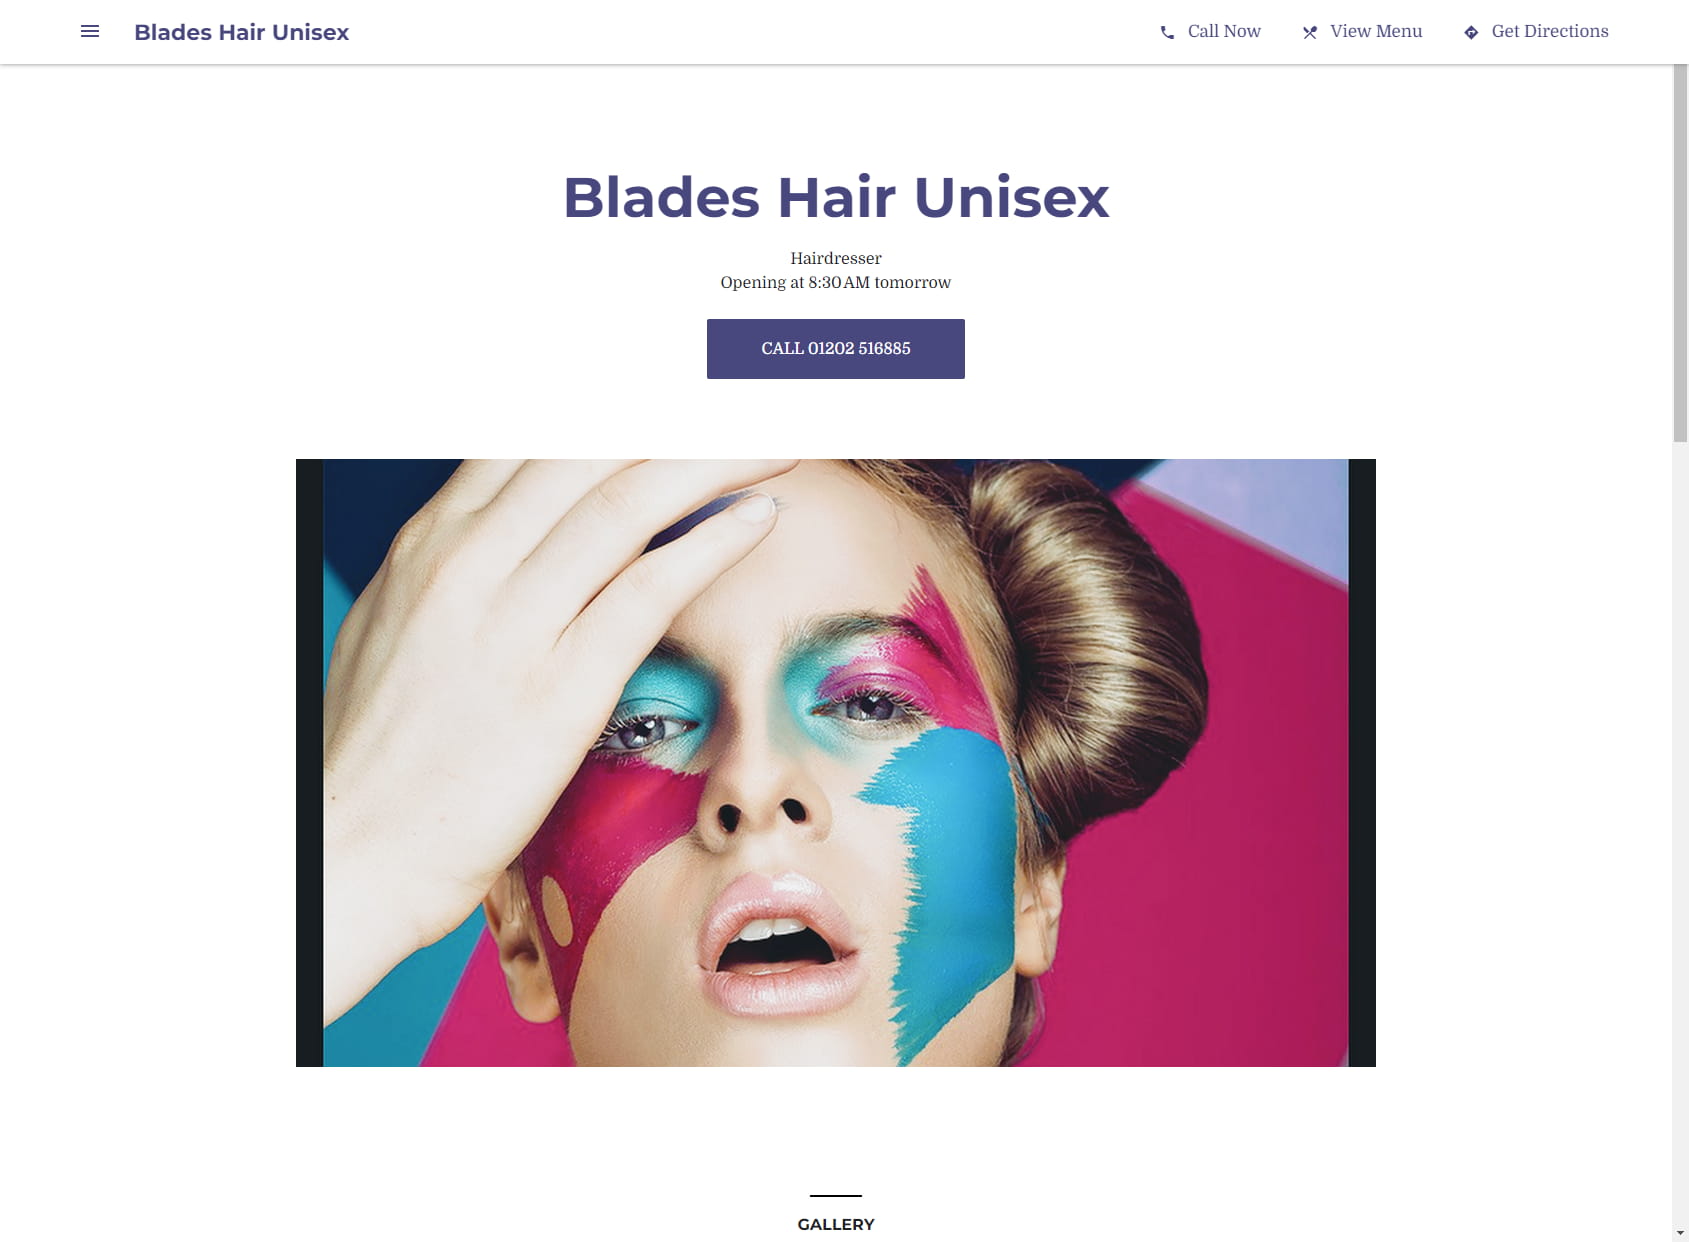 Blades Hair Design